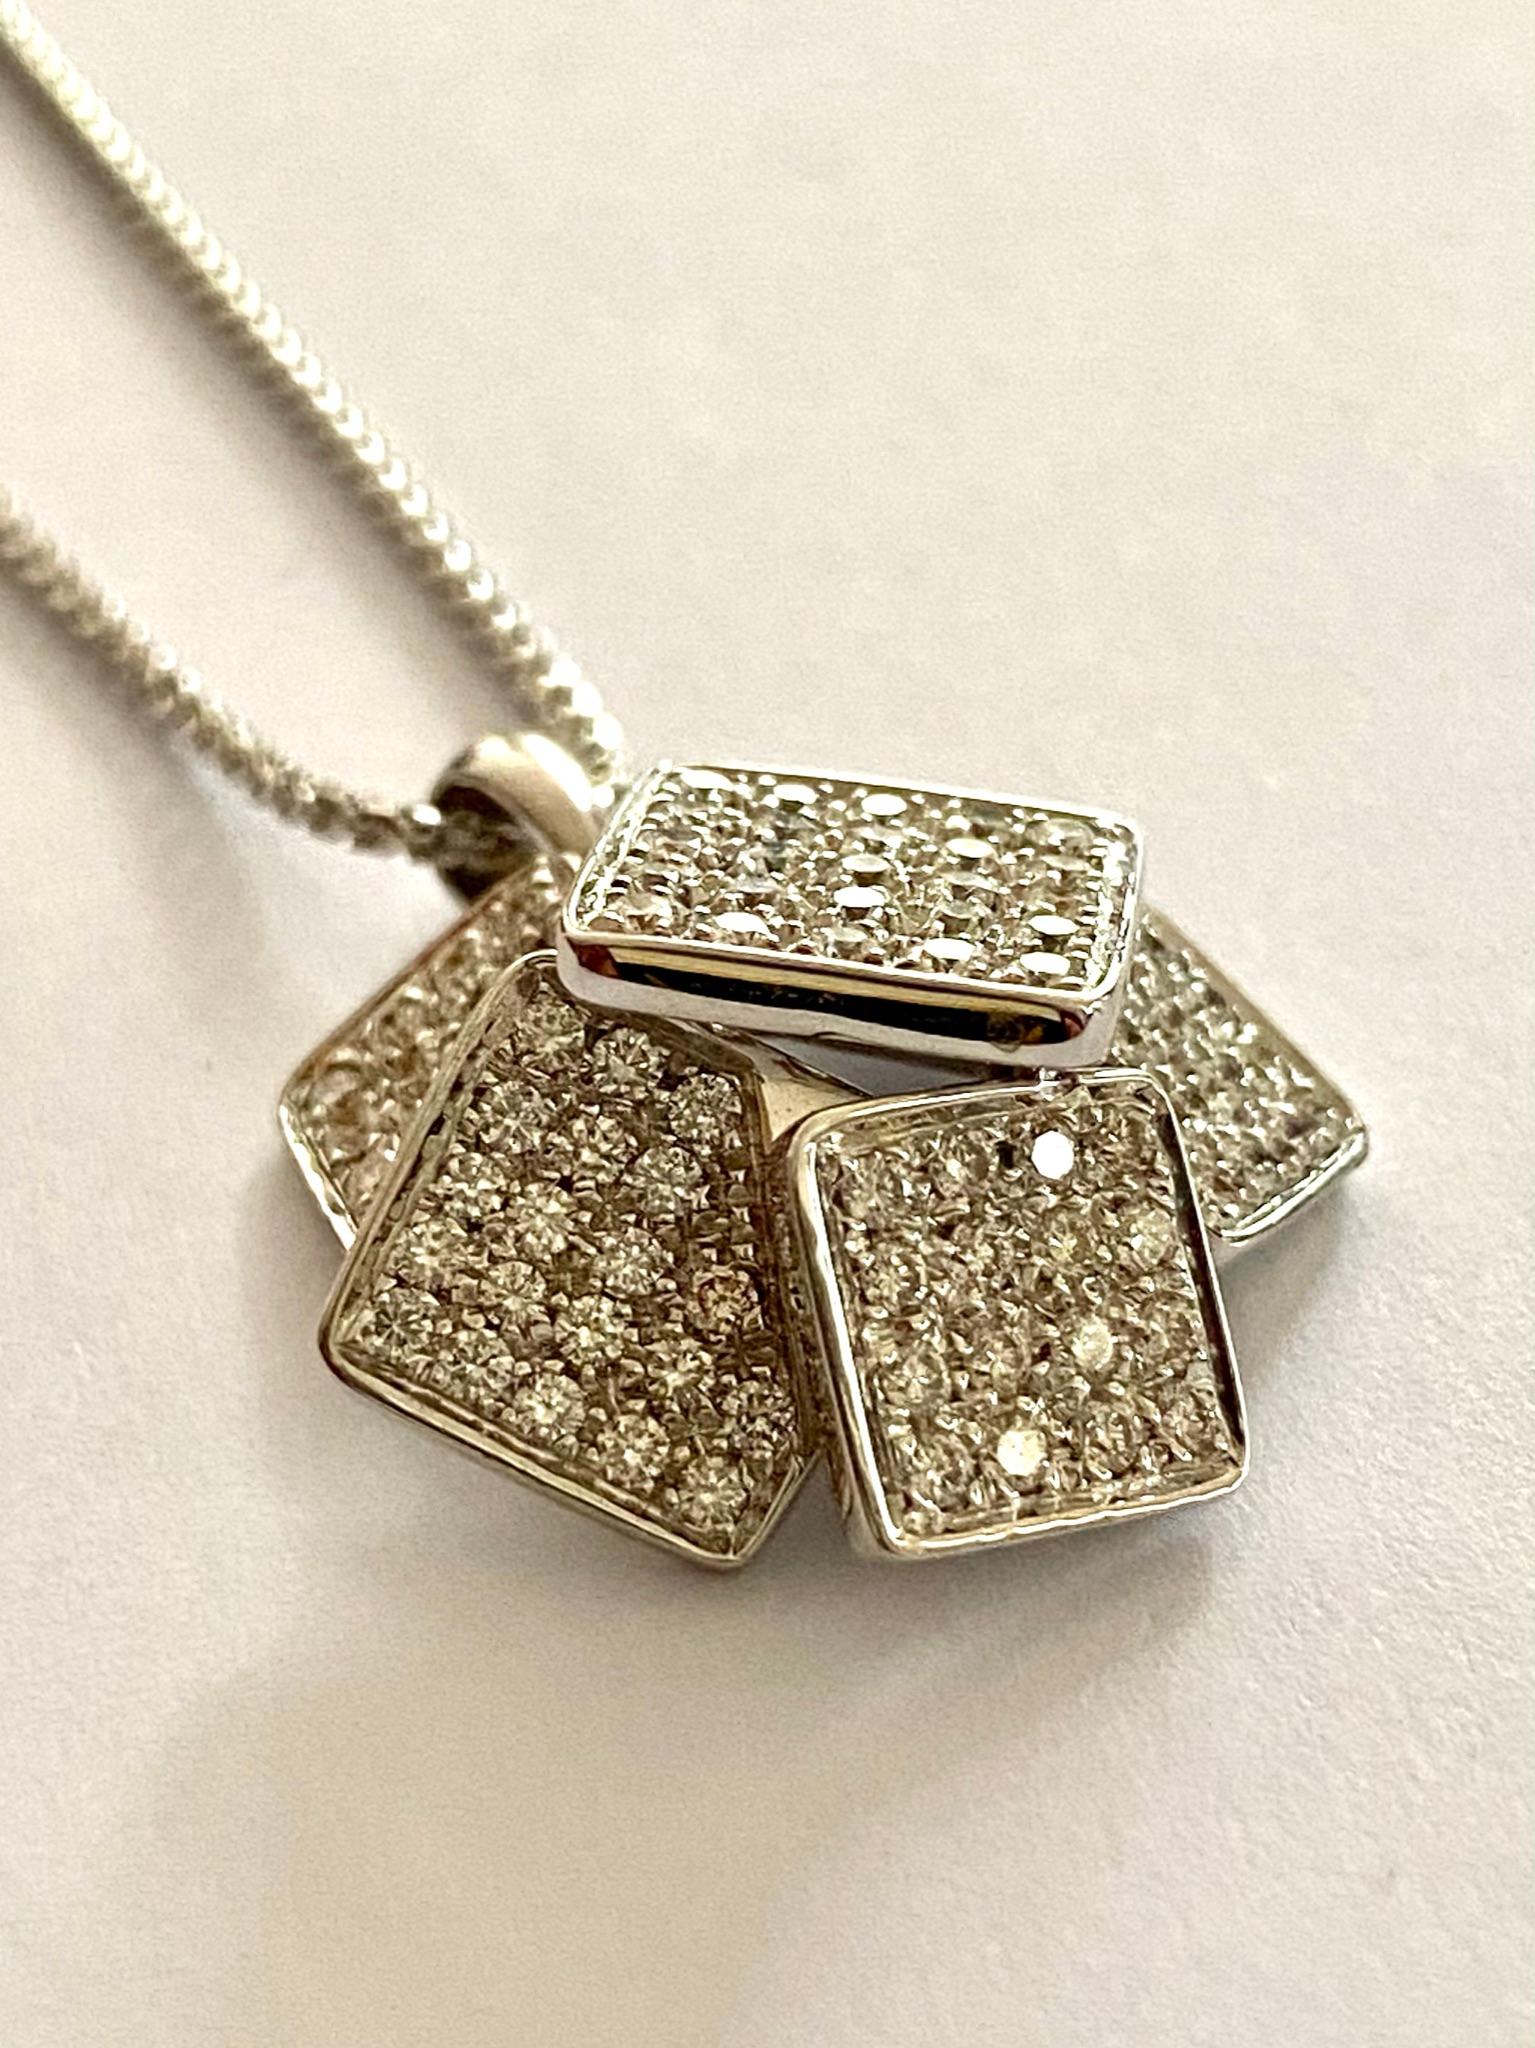 rubik's cube necklace